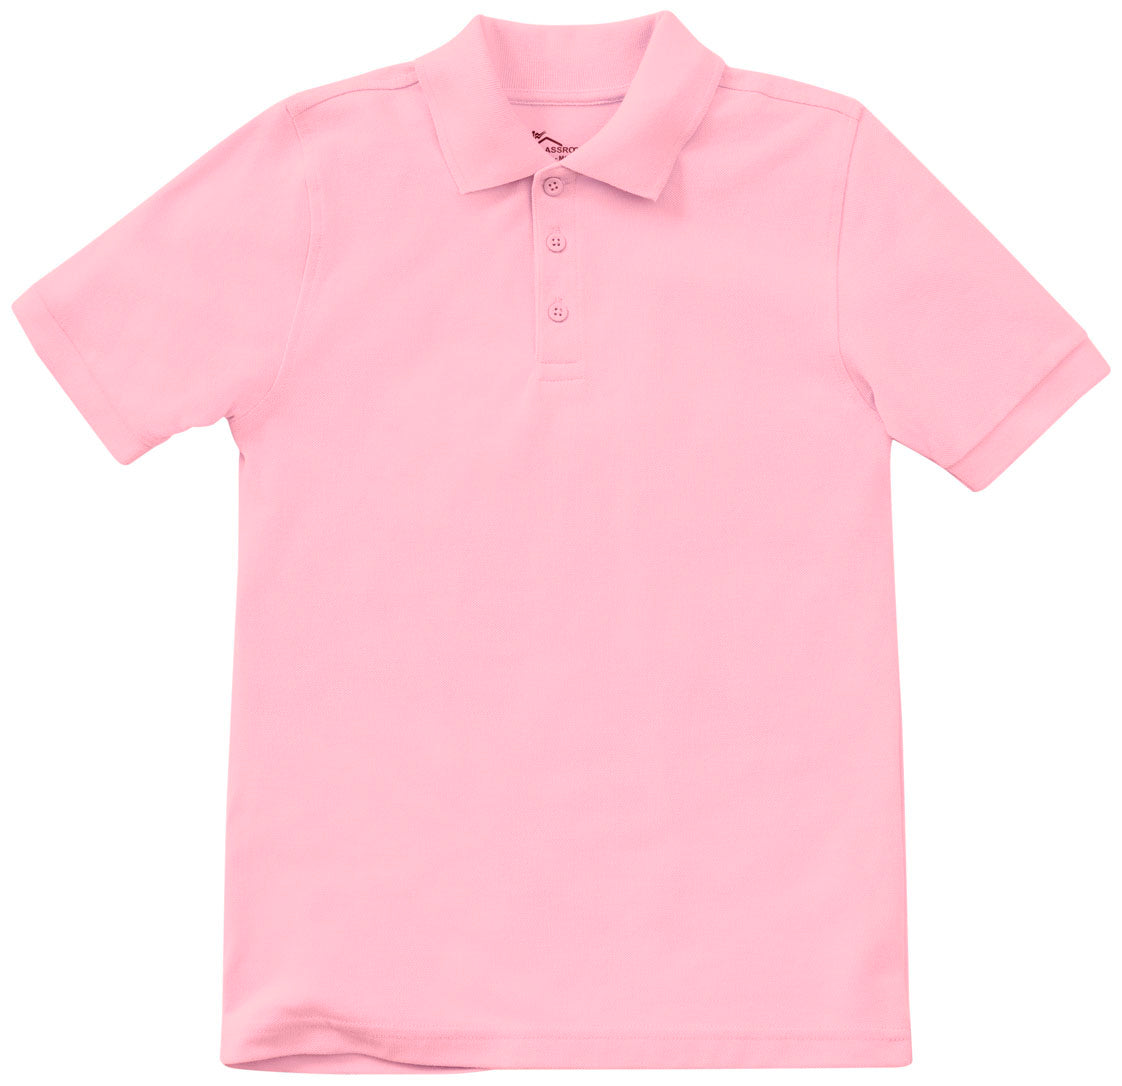 Sudbrook Short Sleeve Golf Shirt - Adult